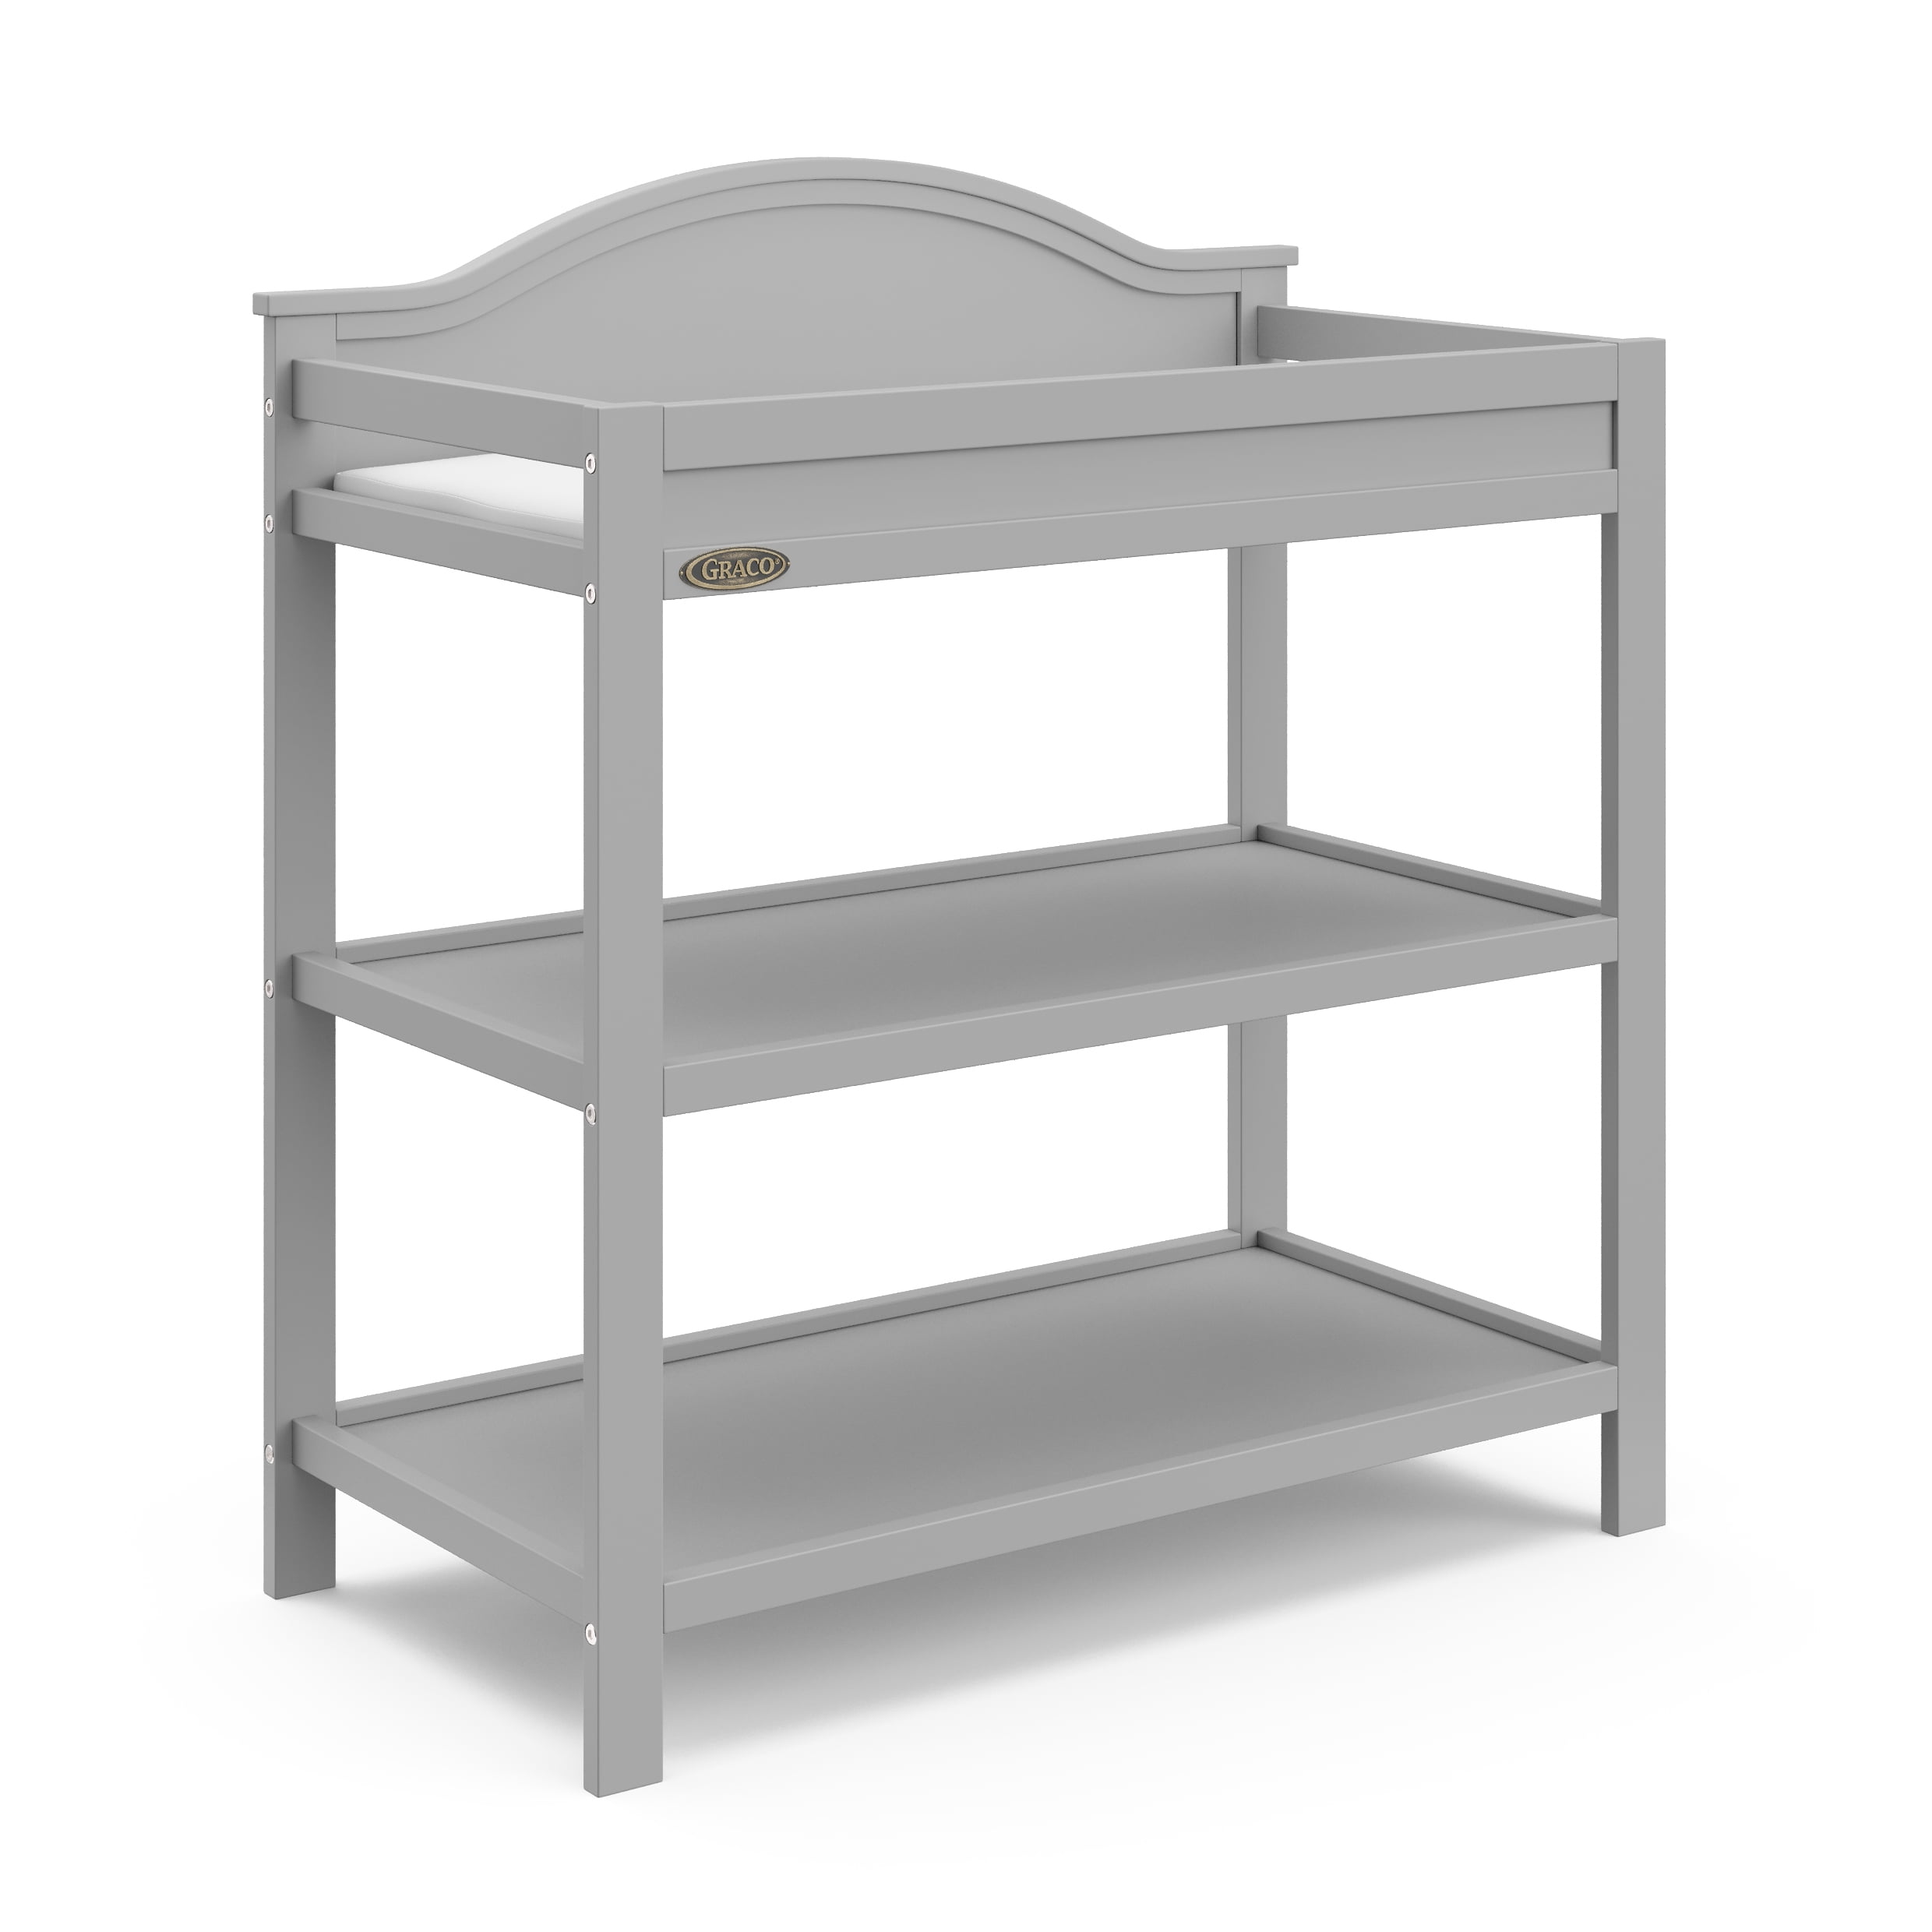 Gray Pine Wood Changing Table W/ 2-Open Shelves Nursery Room Storage Organizer 